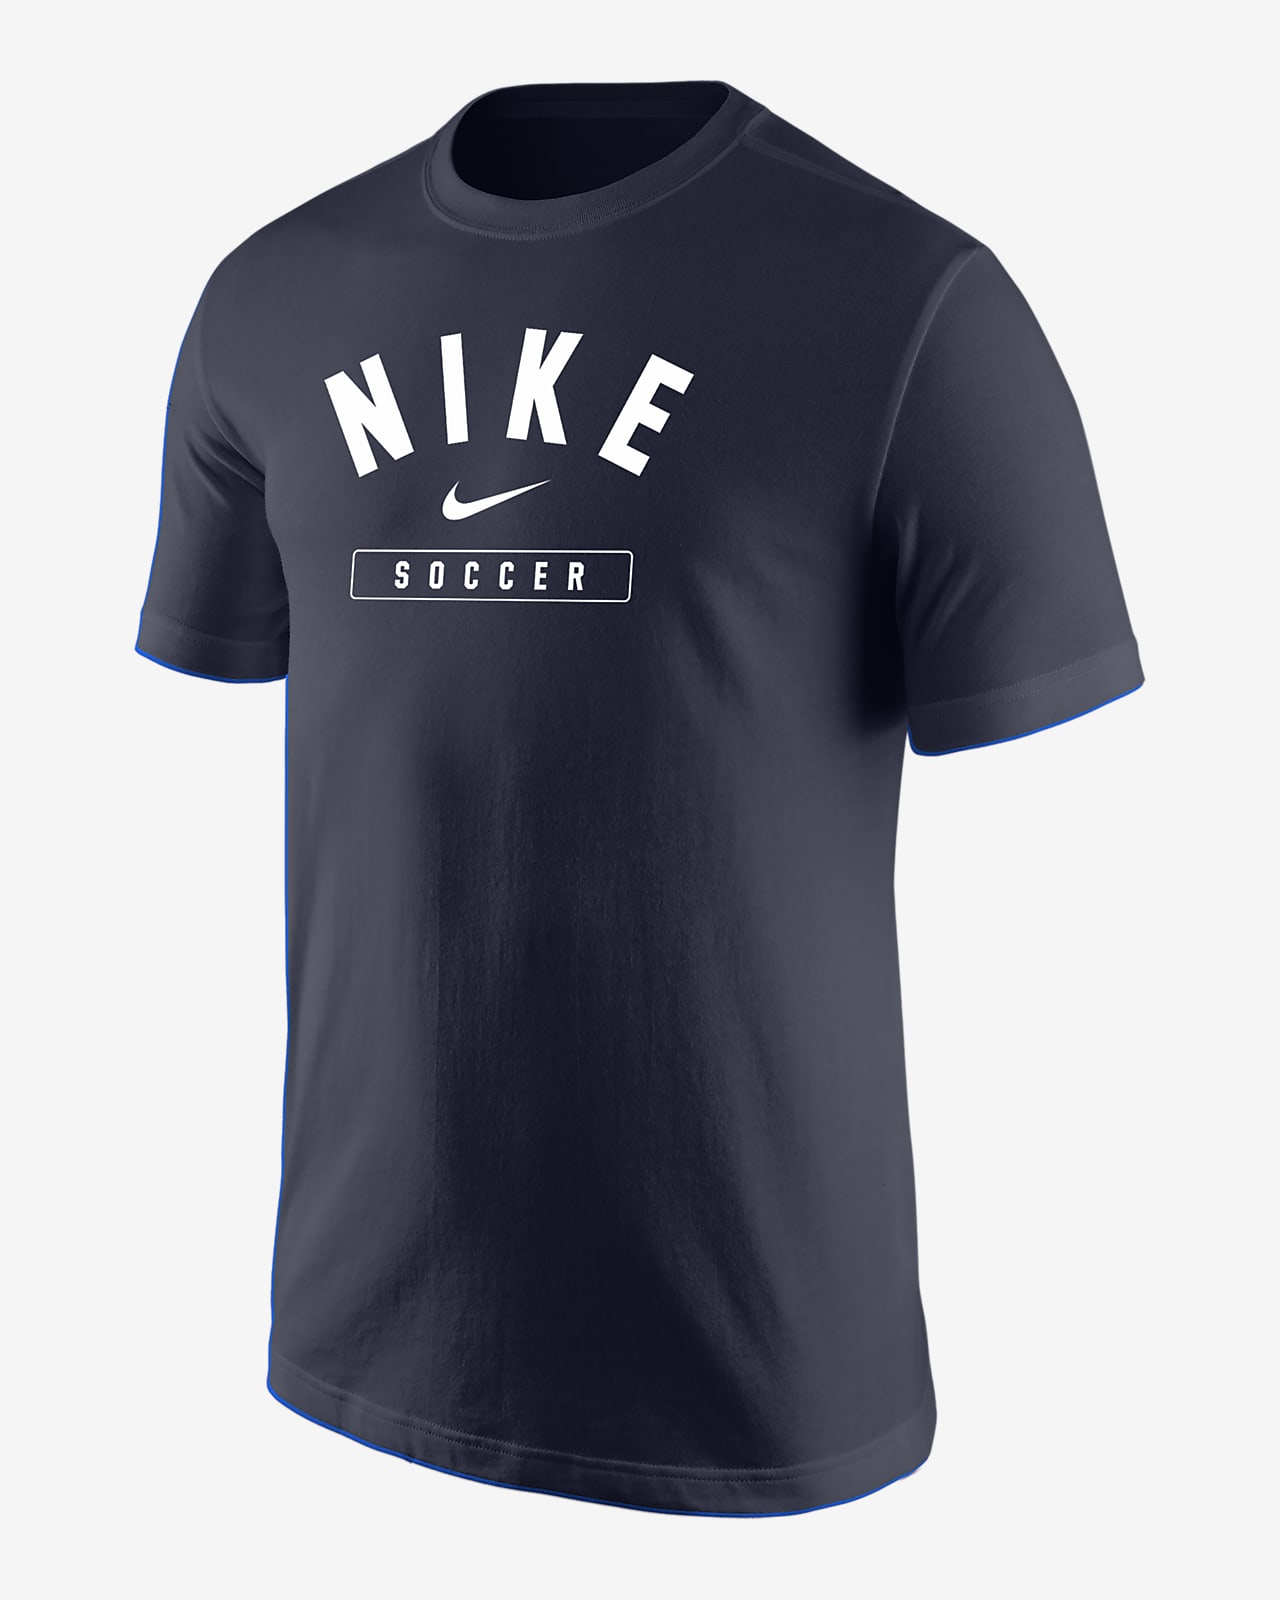 Nike Swoosh Men's Soccer T-Shirt